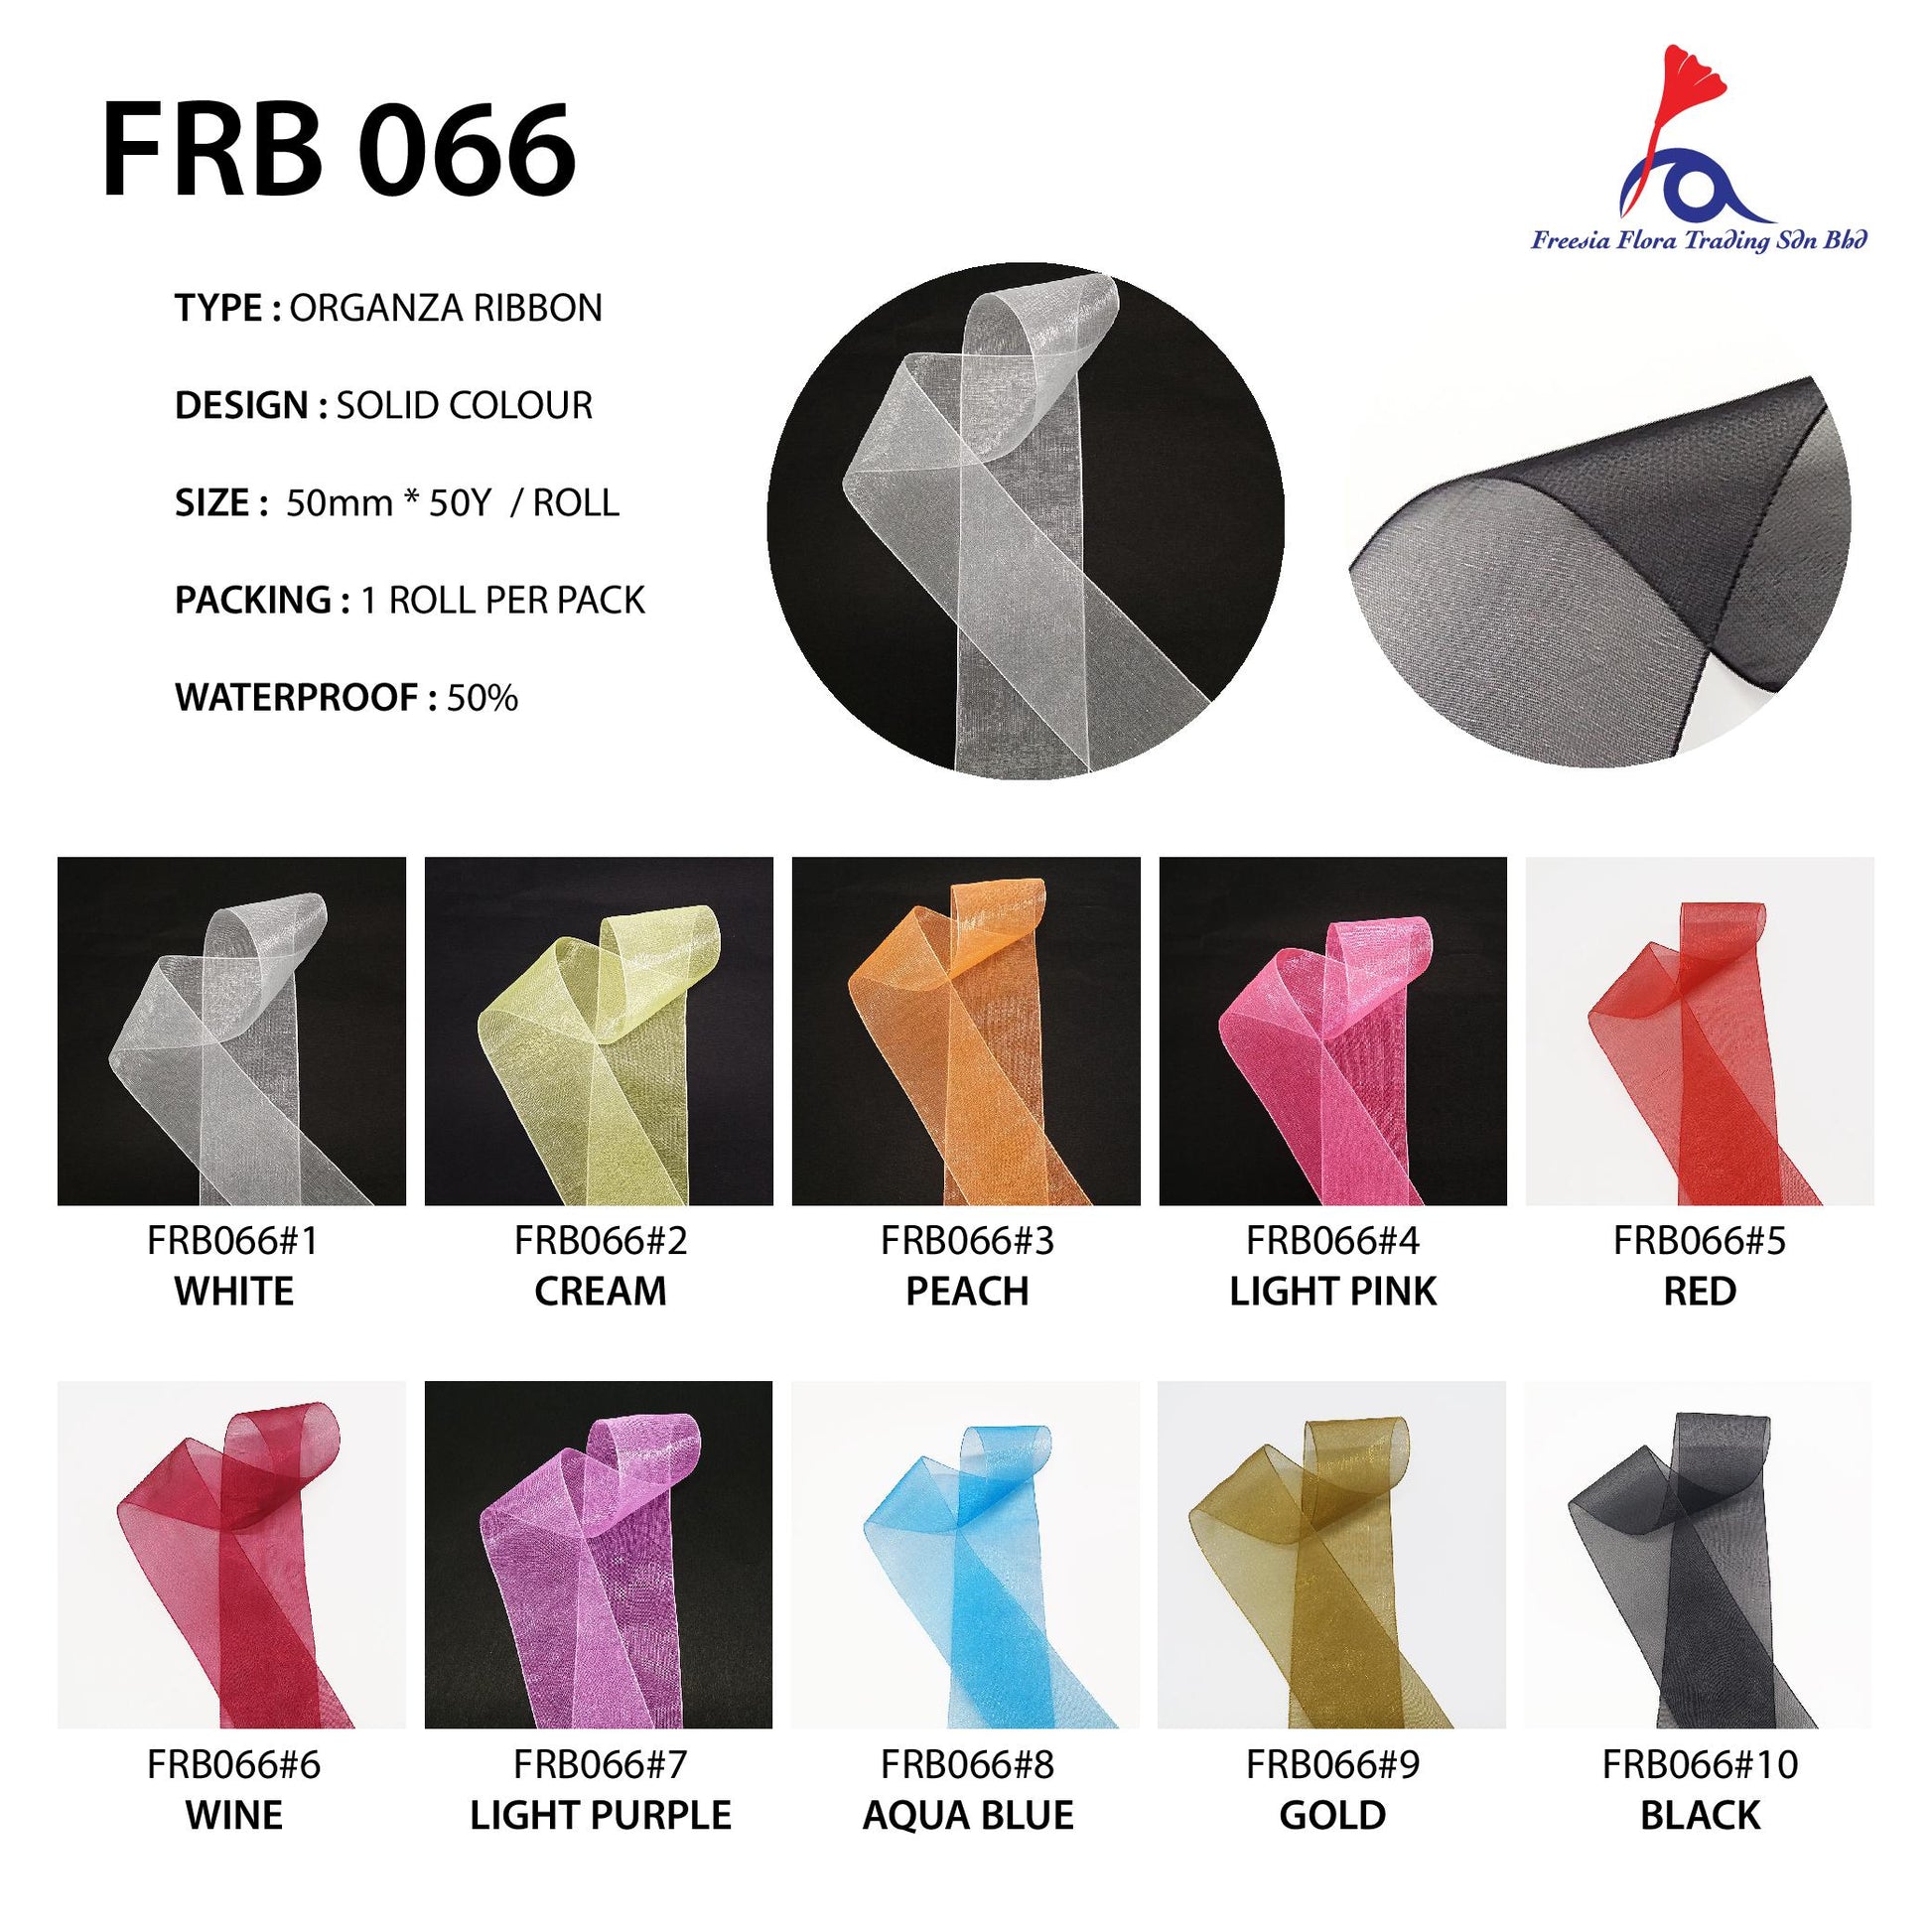 FRB066 - Freesia